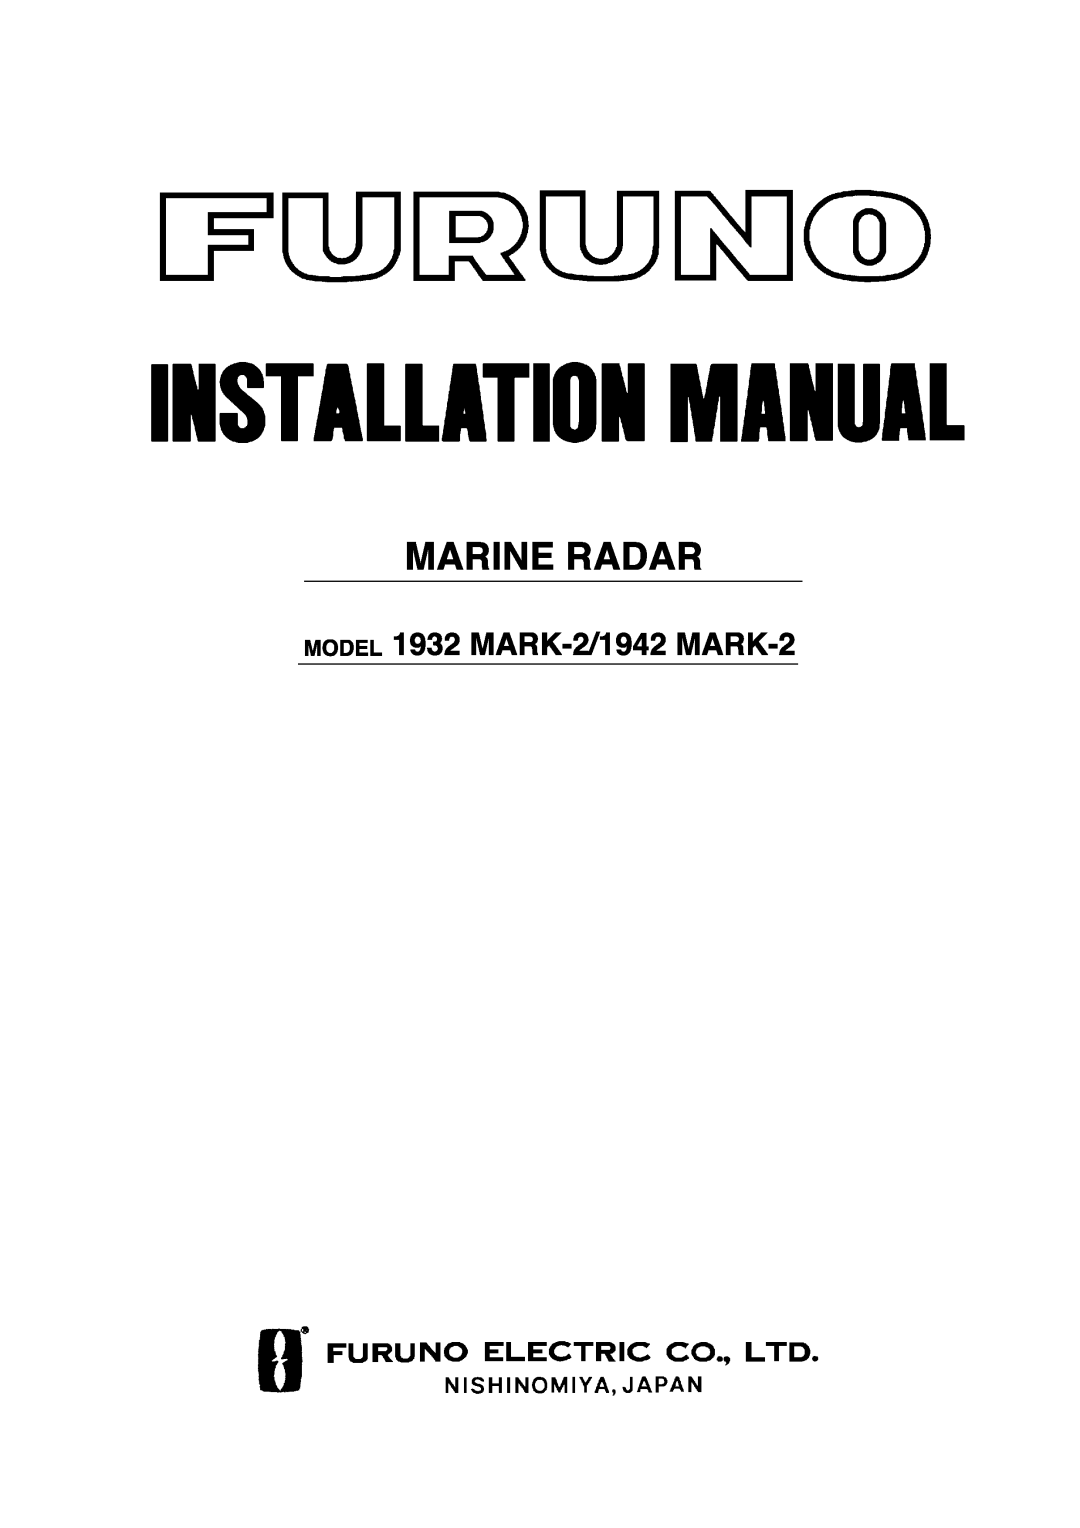 Furuno manual Marine Radar, MODEL 1932 MARK-2/1942 MARK-2 